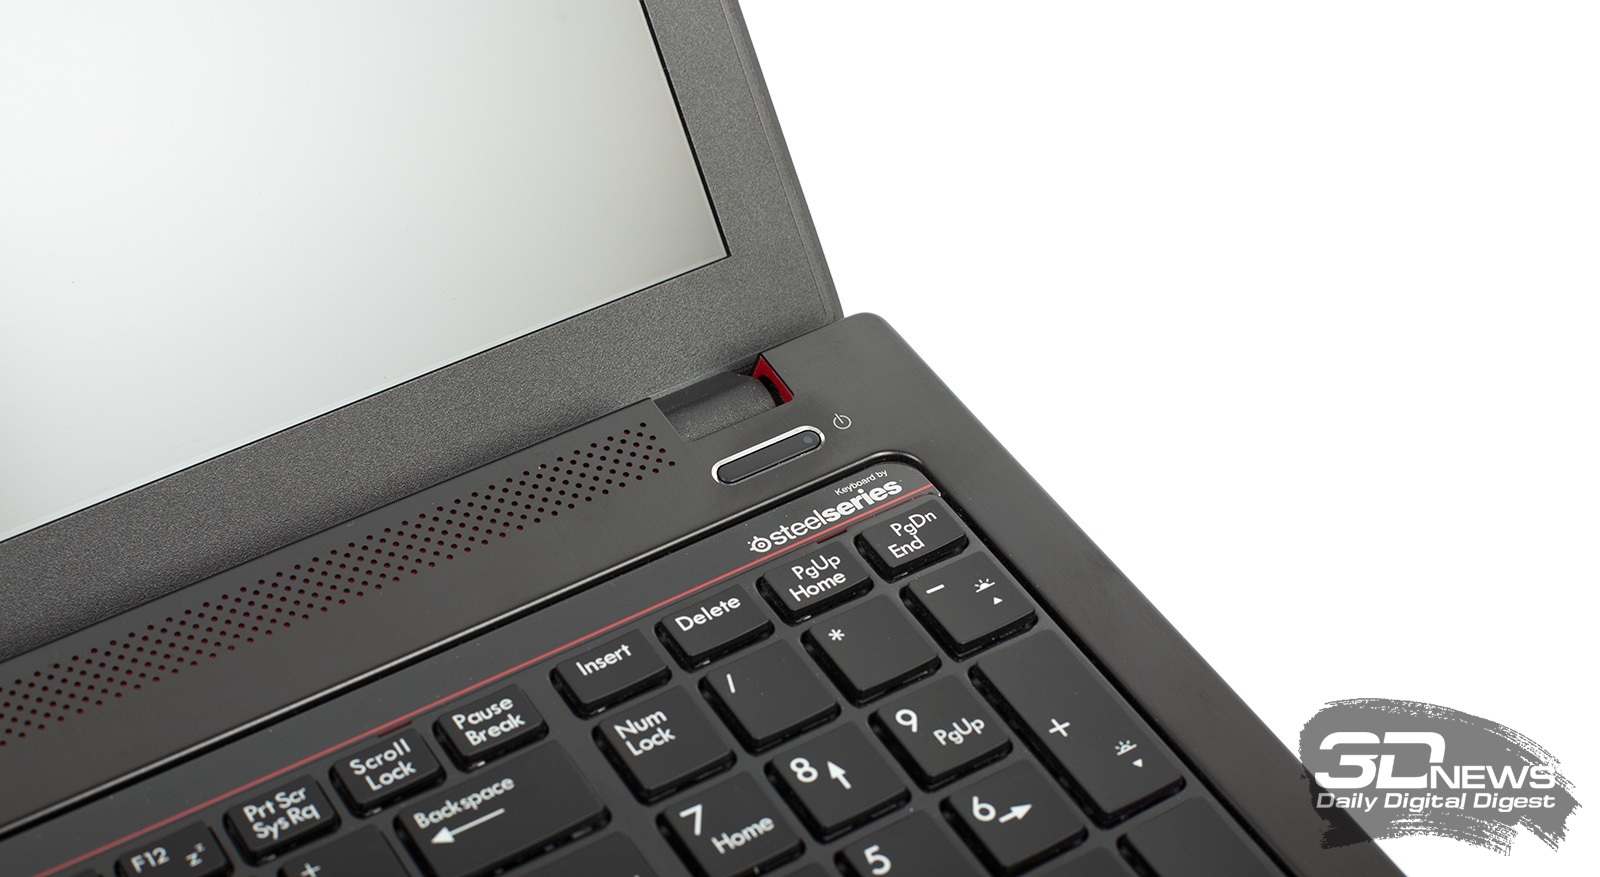 Ноутбук Msi Ge60 2pe Apache Pro Обзор